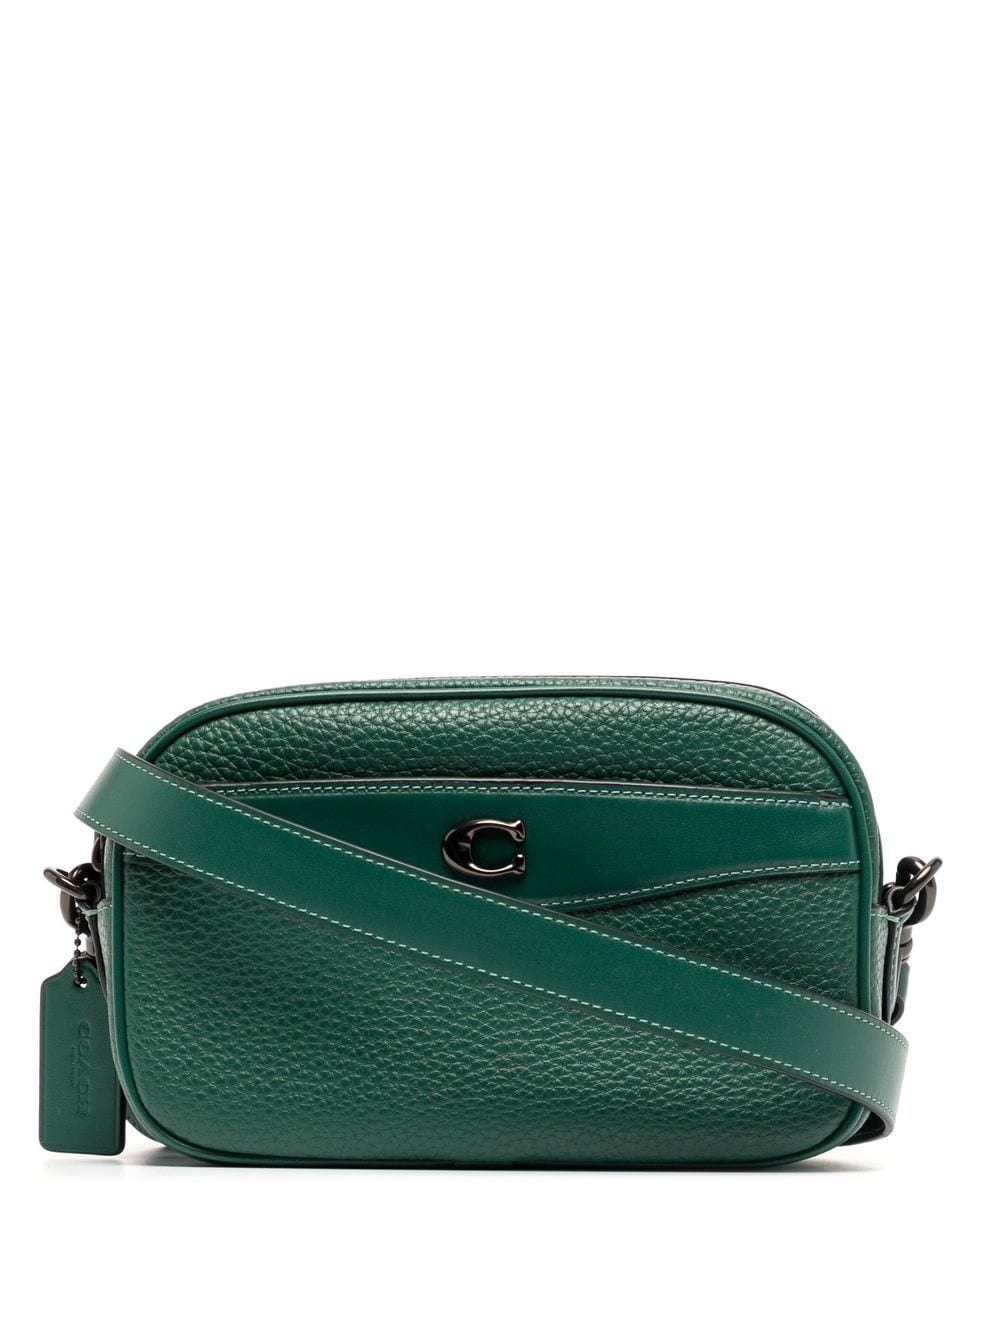 Coach pebble leather camera bag - Green